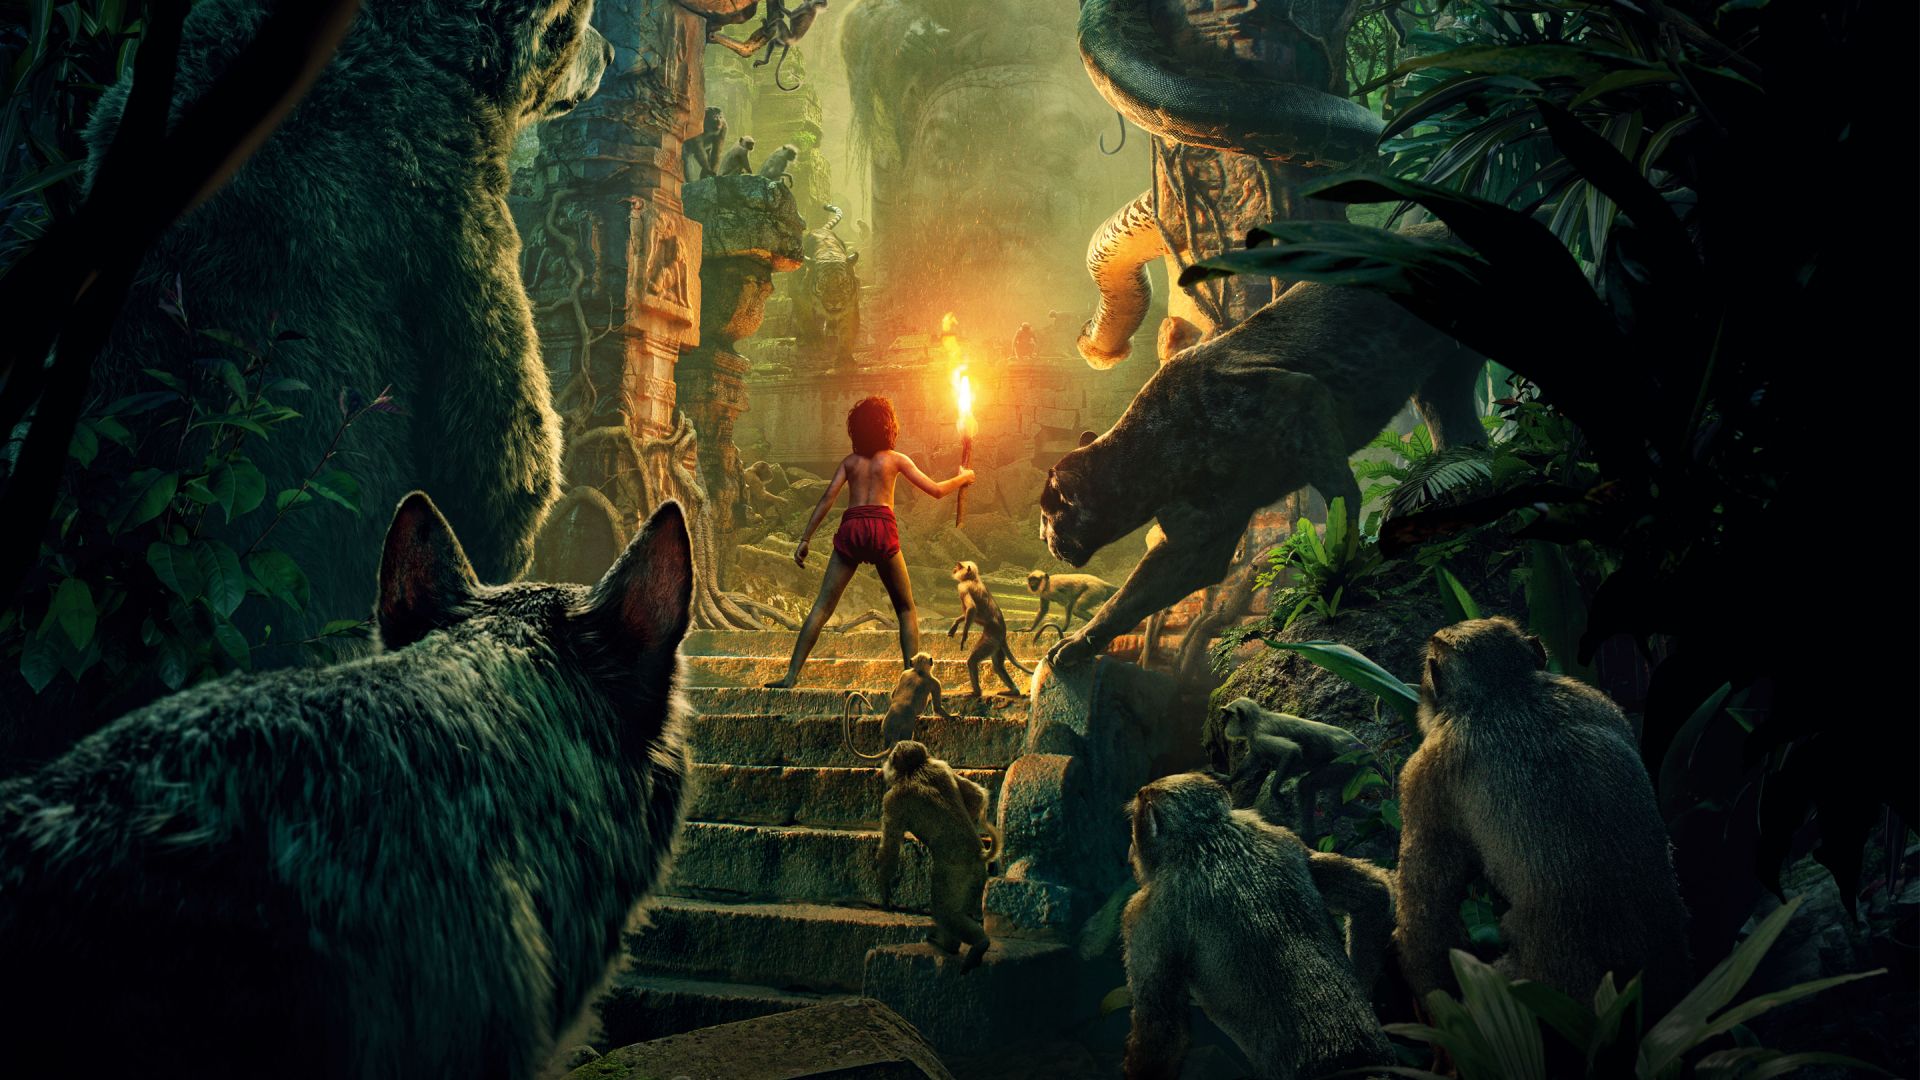 Книга джунглей, Лучшие фильмы, Маугли, Багира, The Jungle Book, Best Movies, Mowgli, Bagheera (horizontal)